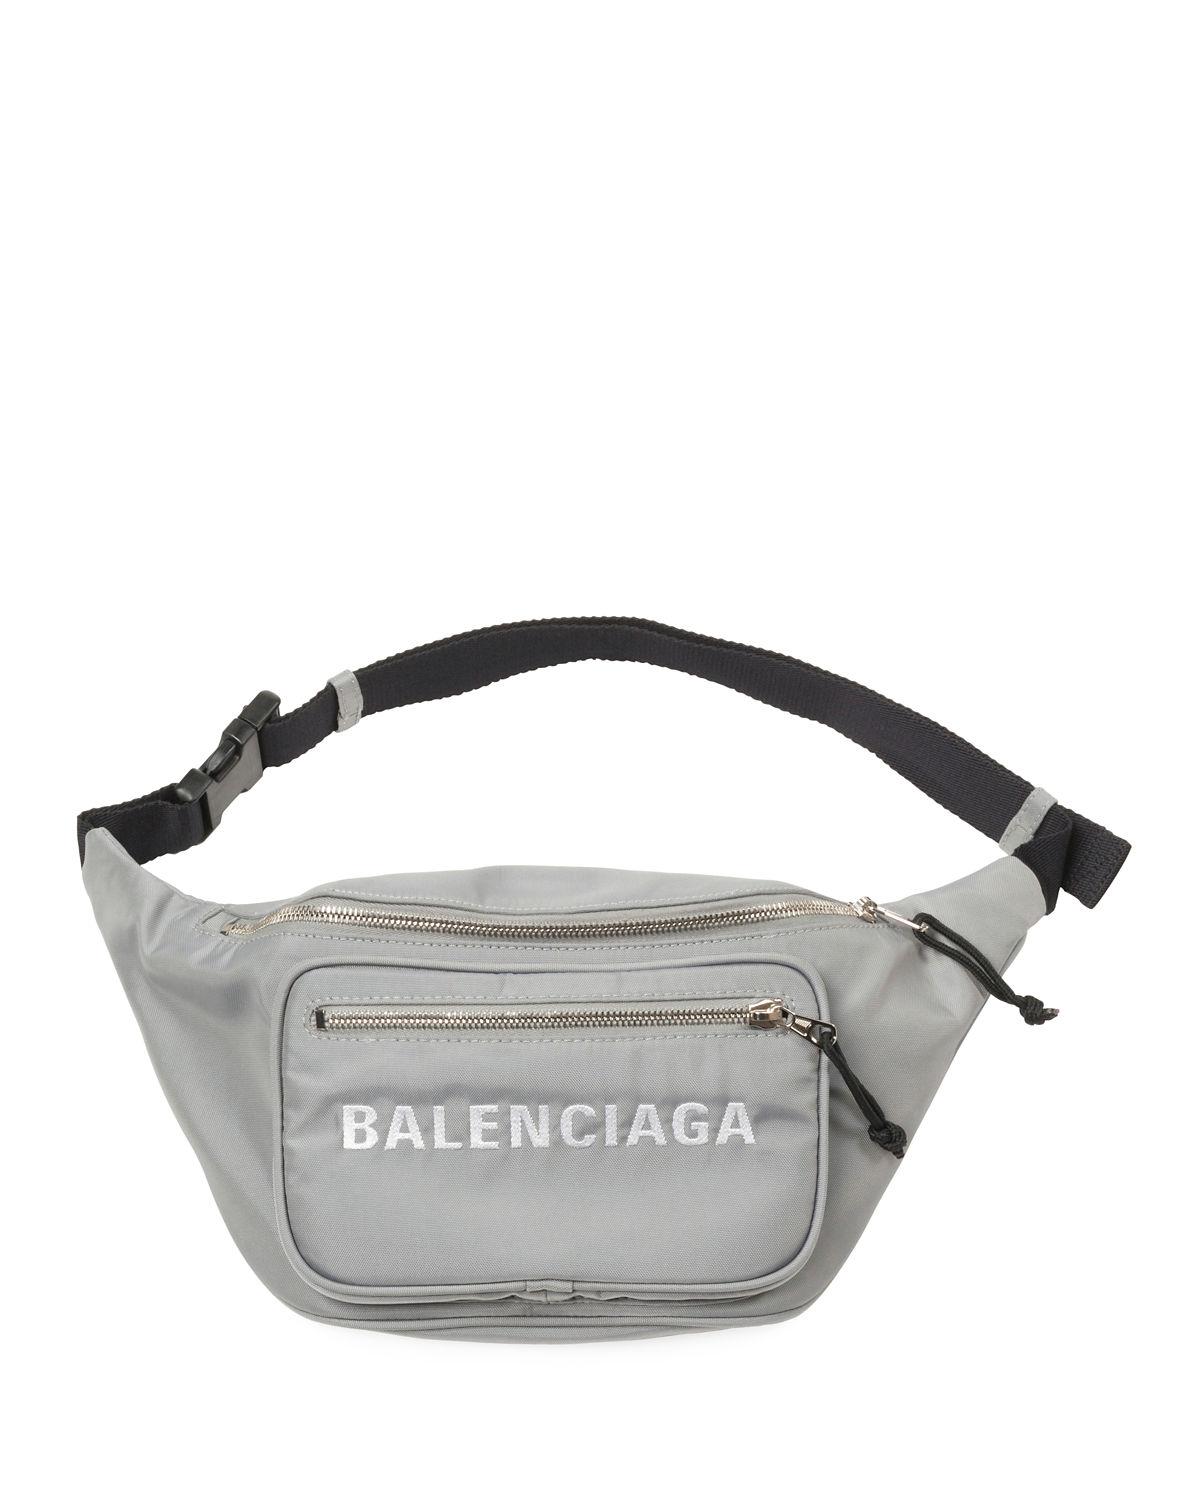 white balenciaga fanny pack